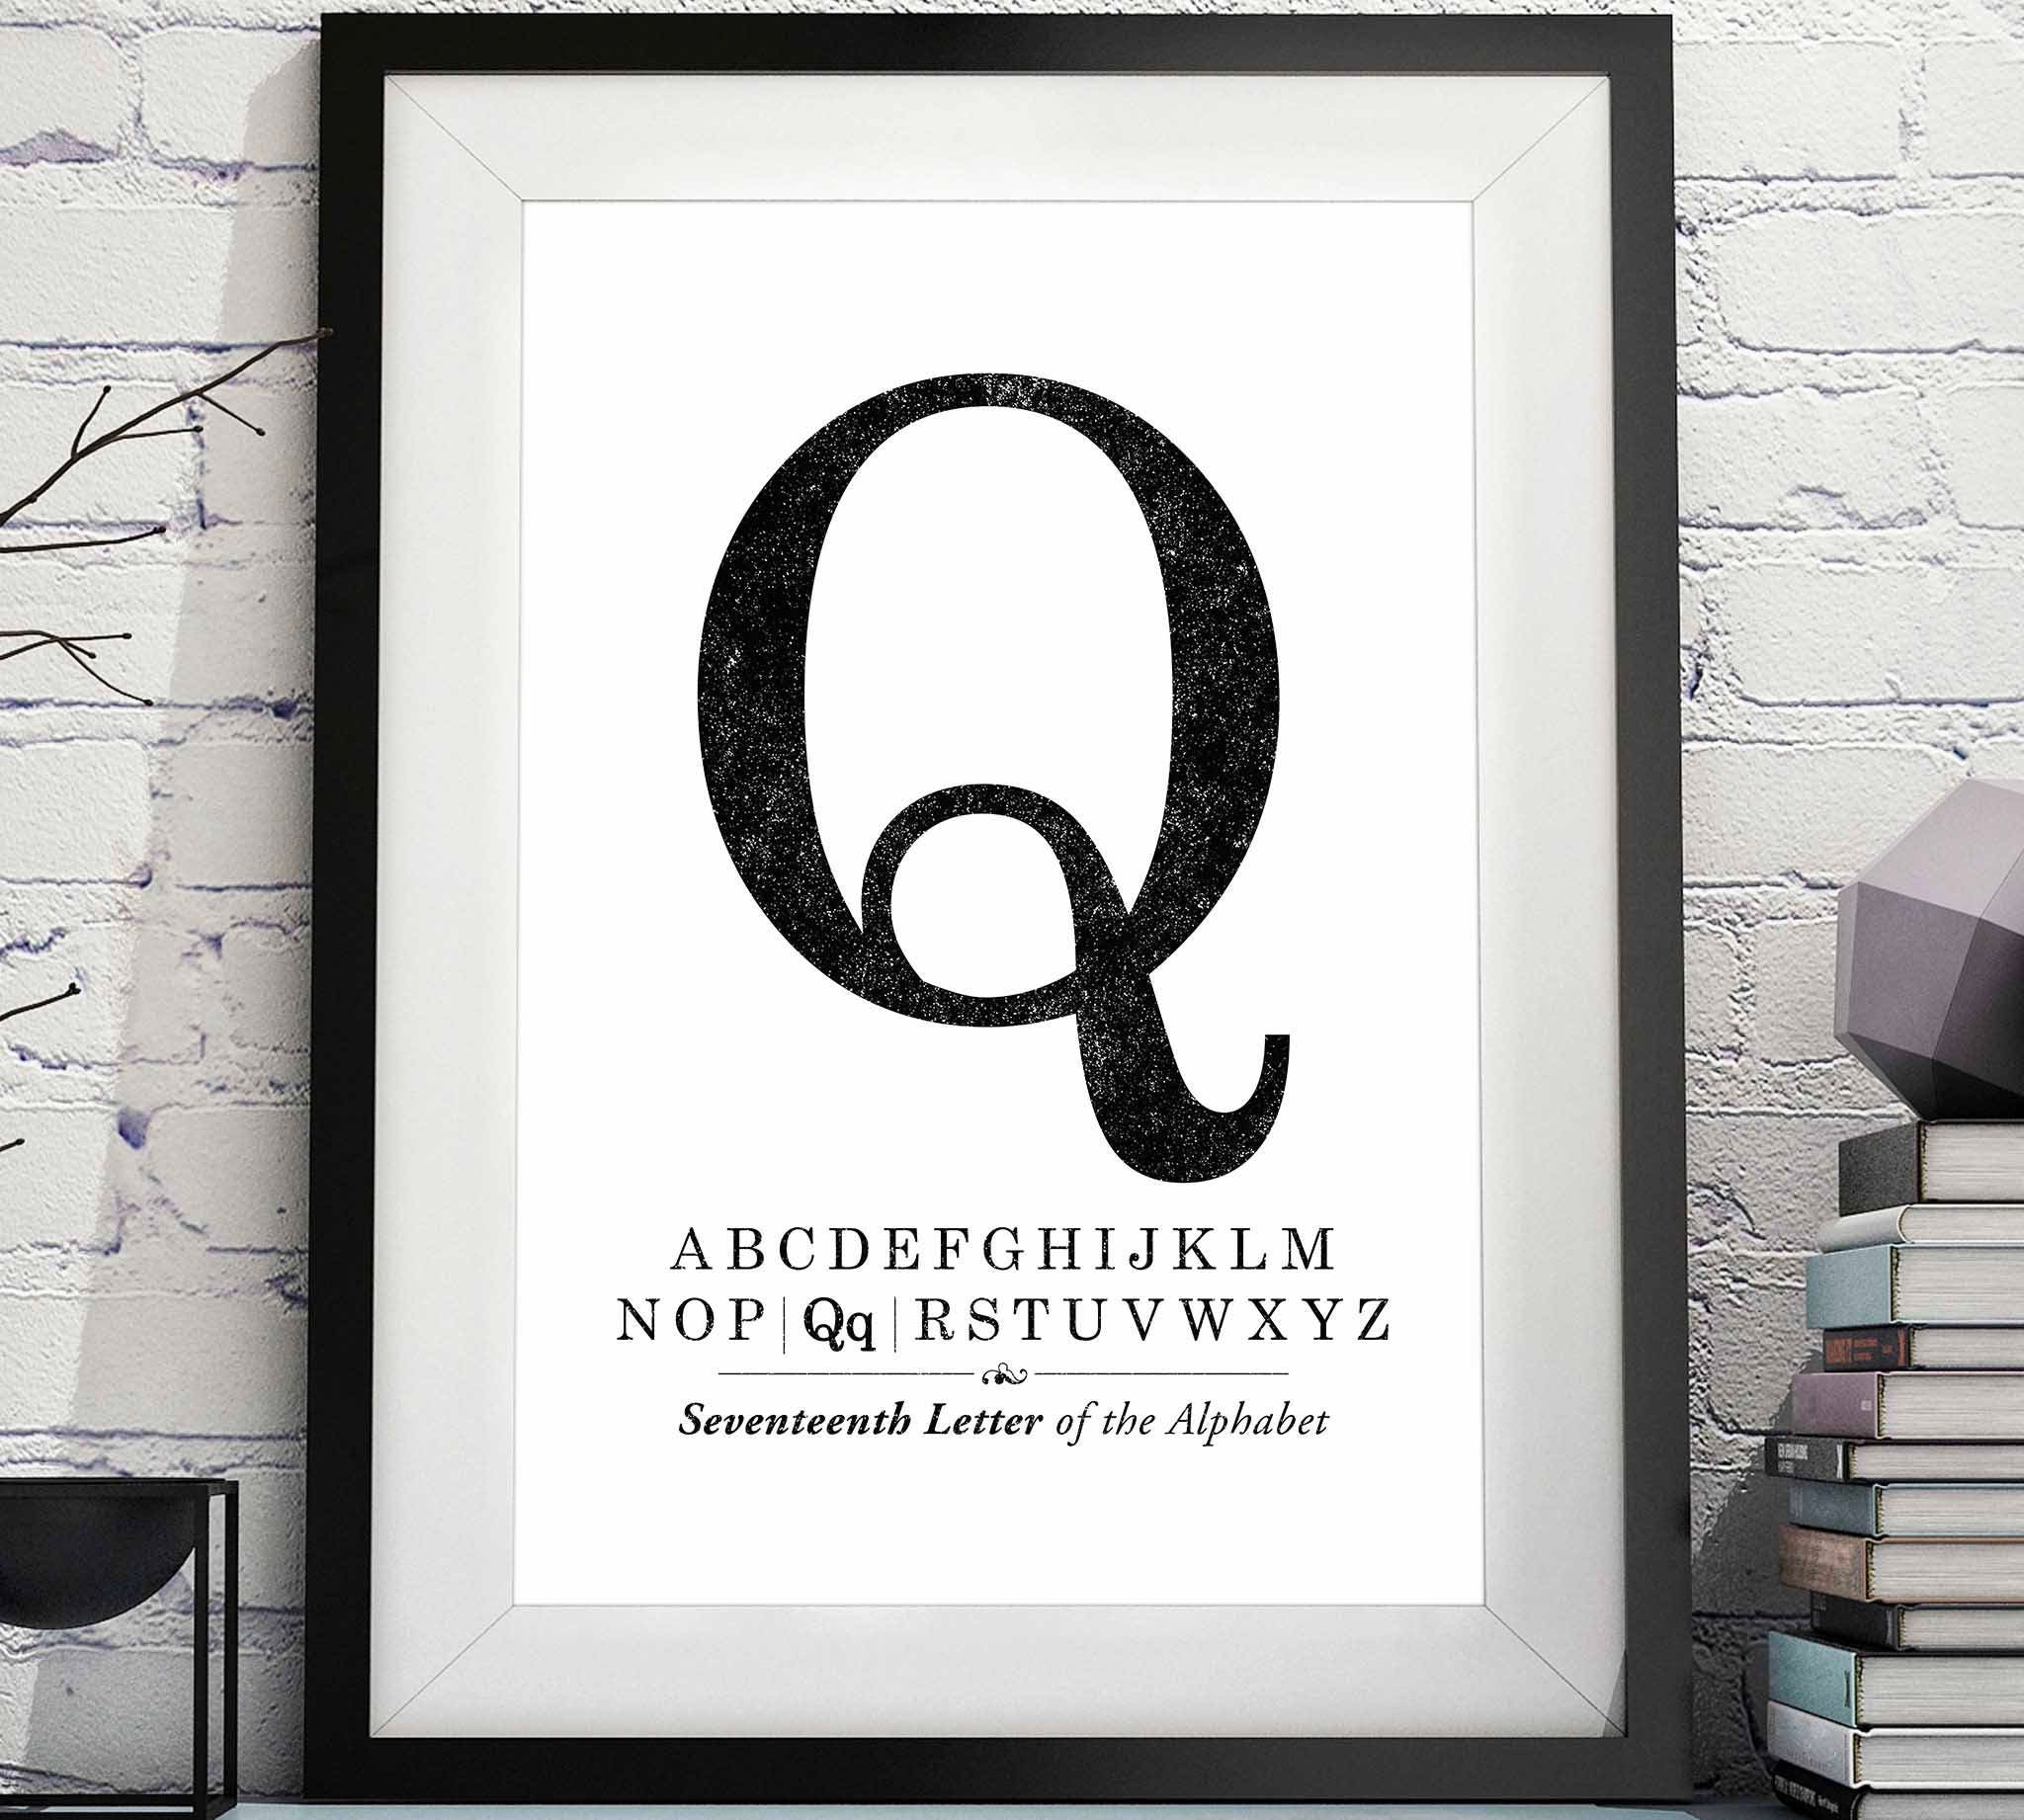 Q - Alphabet Lore - Posters and Art Prints